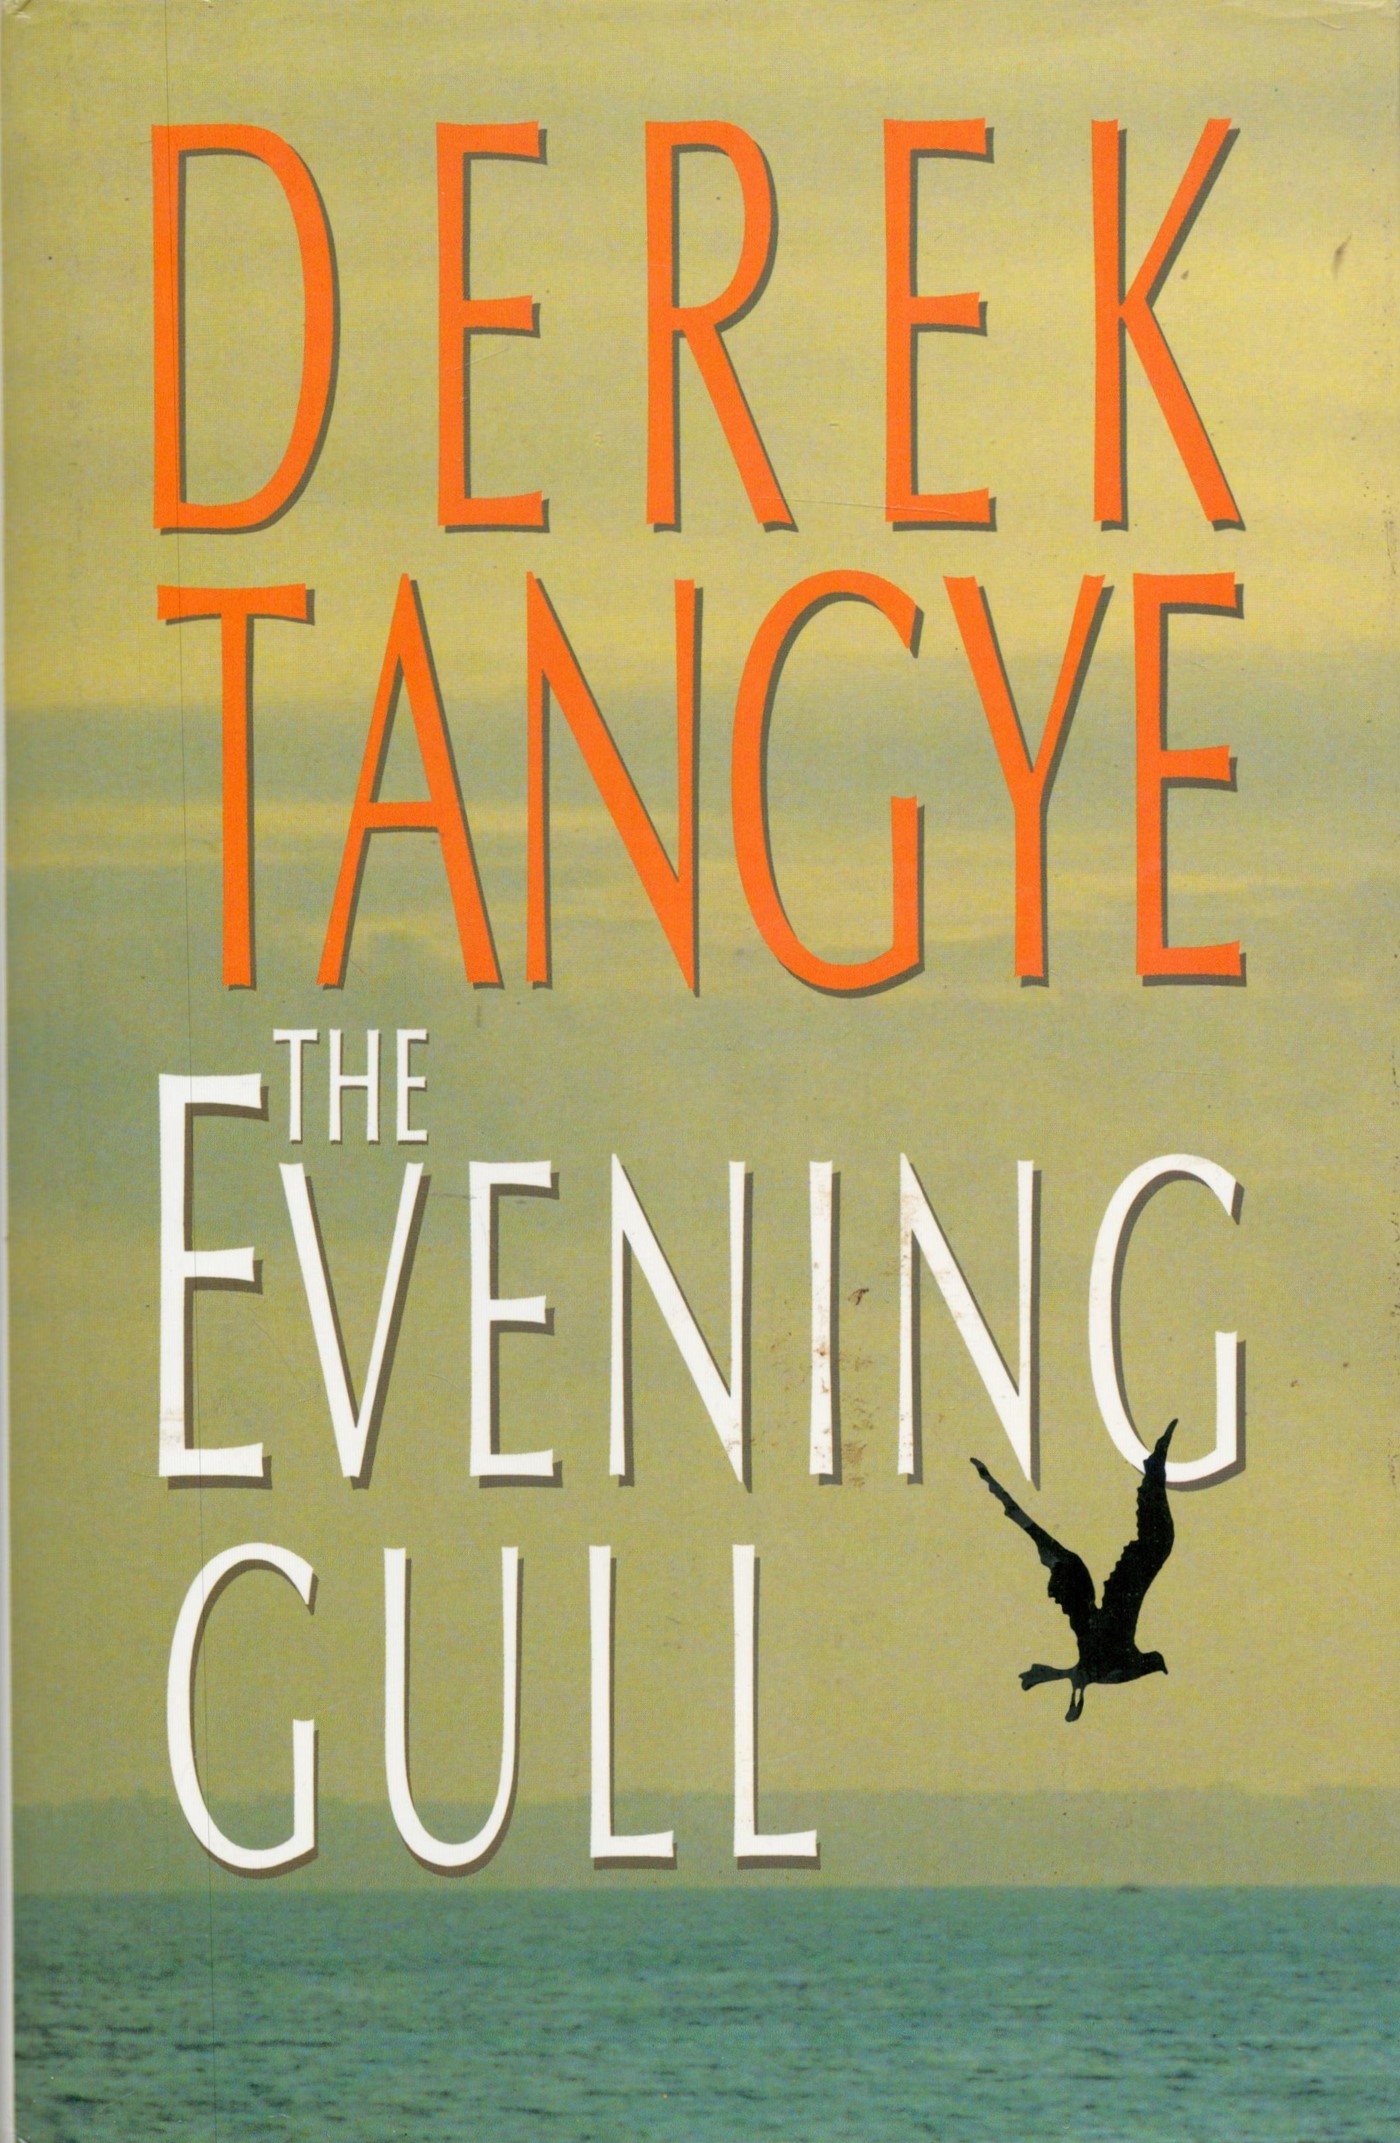 Signed Book Derek Tangye The Evening Cull Hardback Book 1990 First Edition Signed by Derek Tangye on